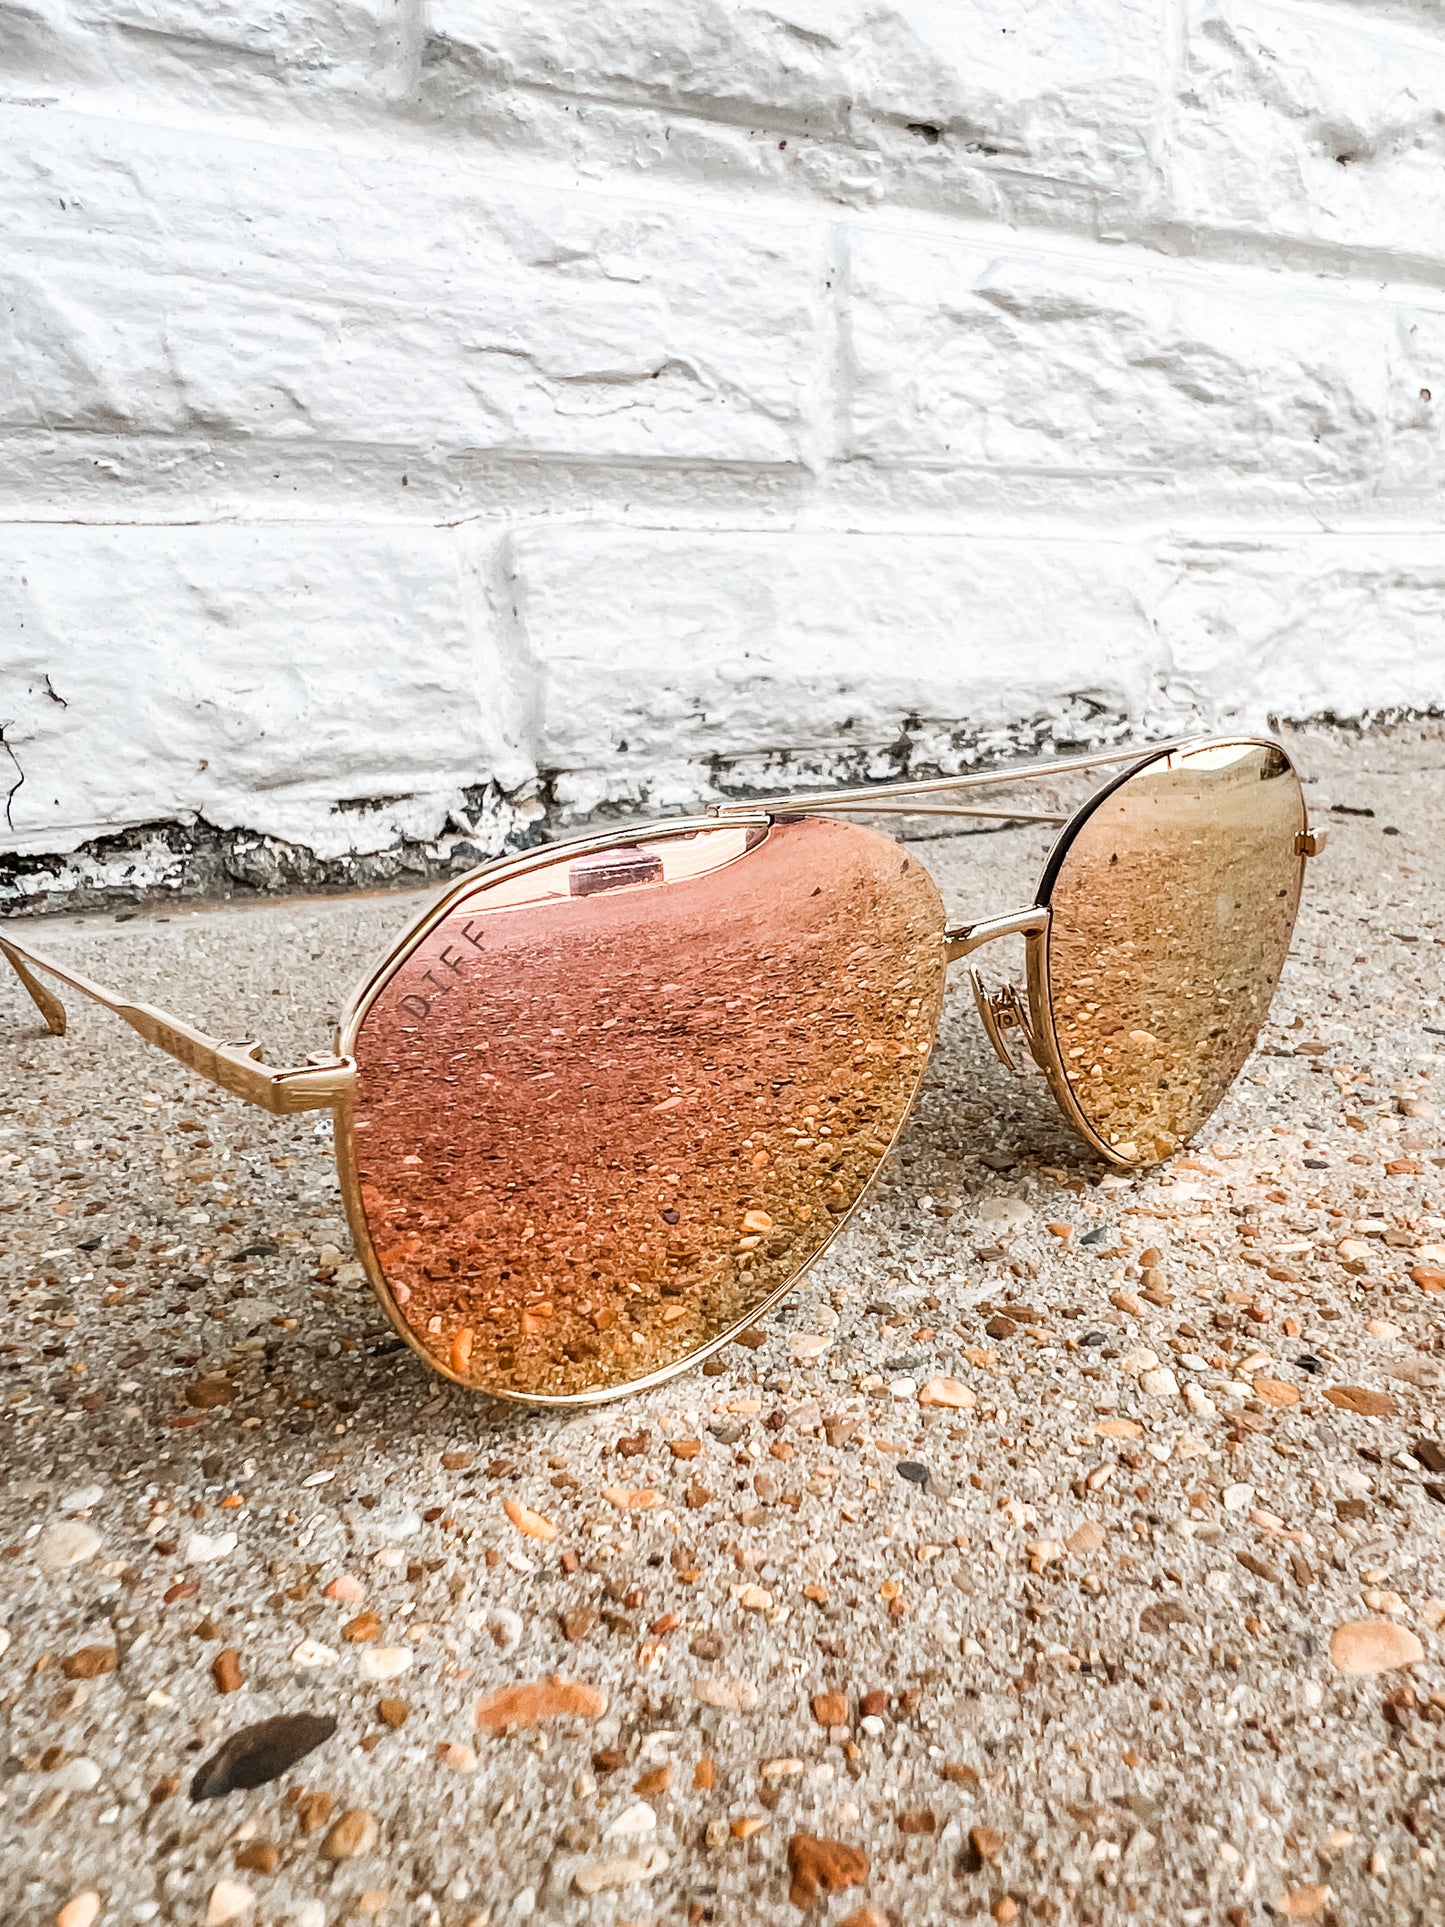 Dash Gold Peach Mirror Sunglasses